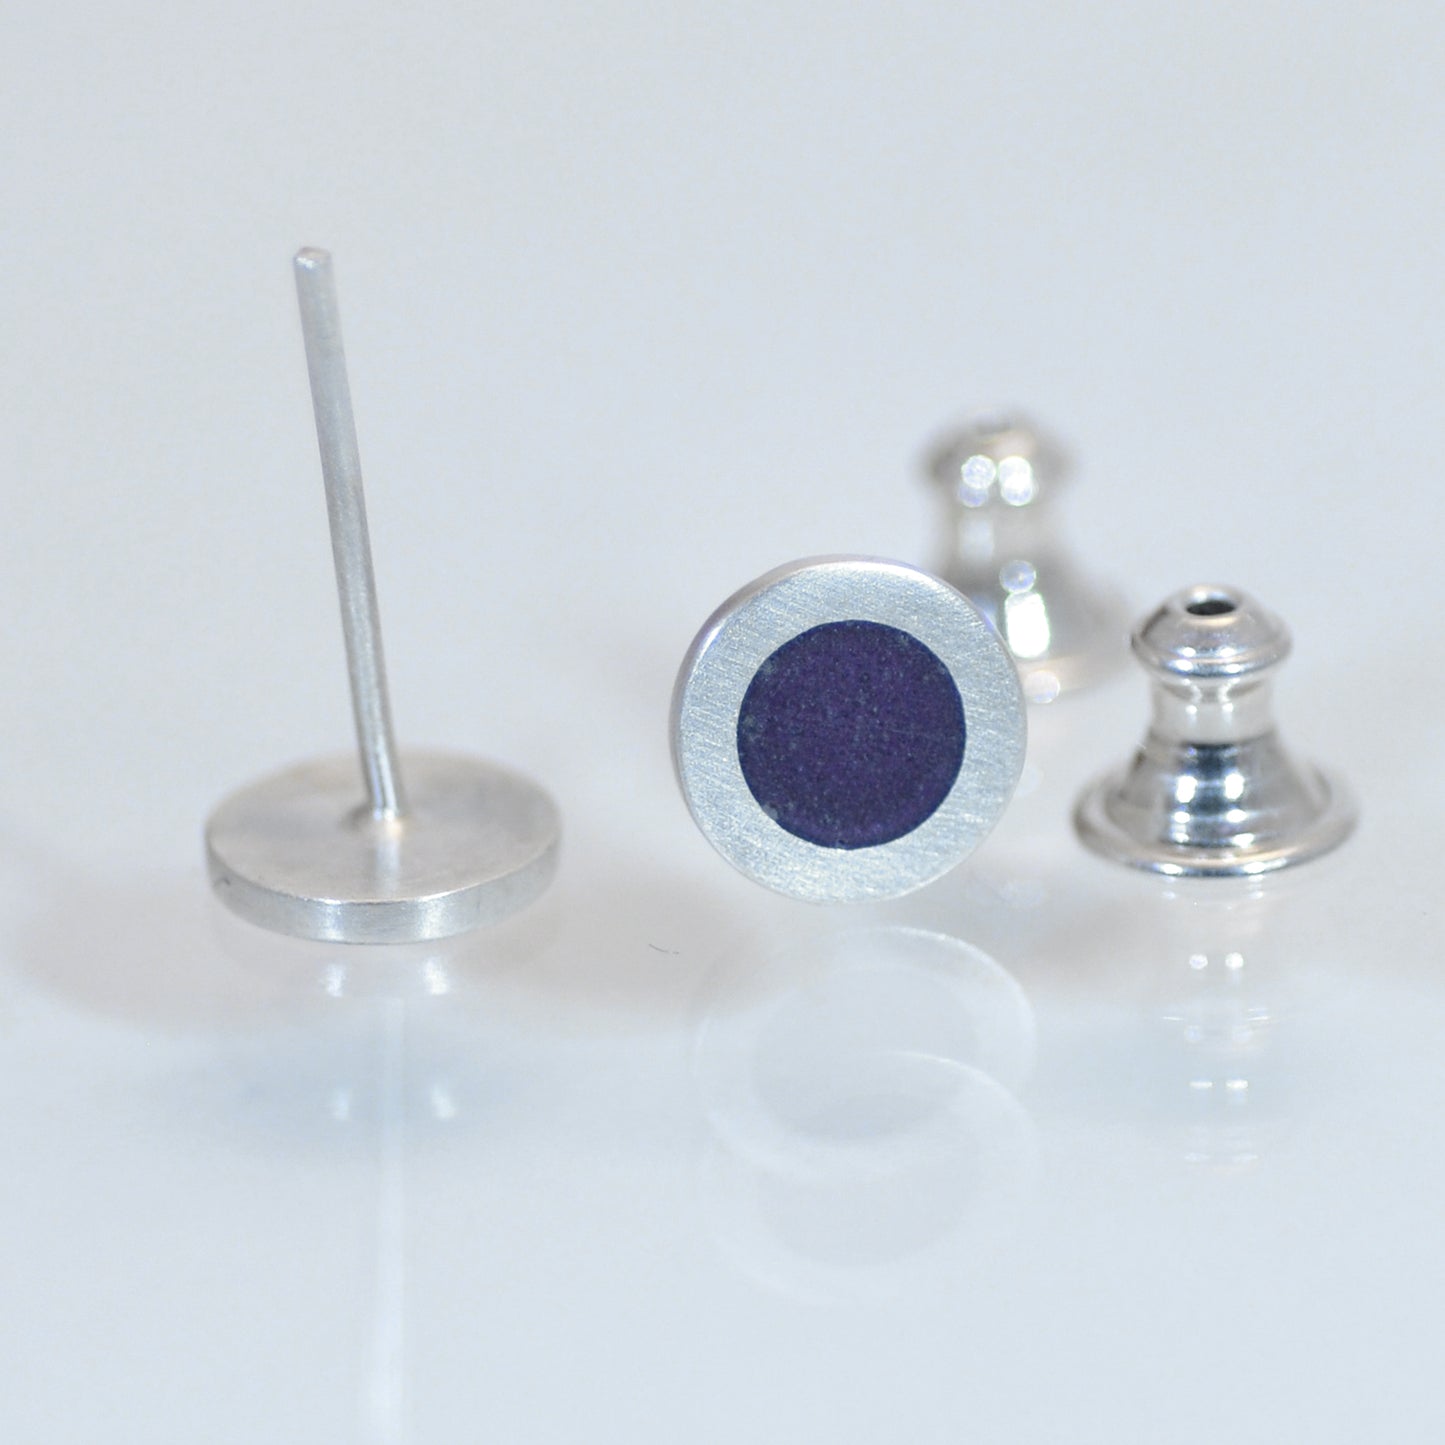 Small round silver flat ear studs, light purple